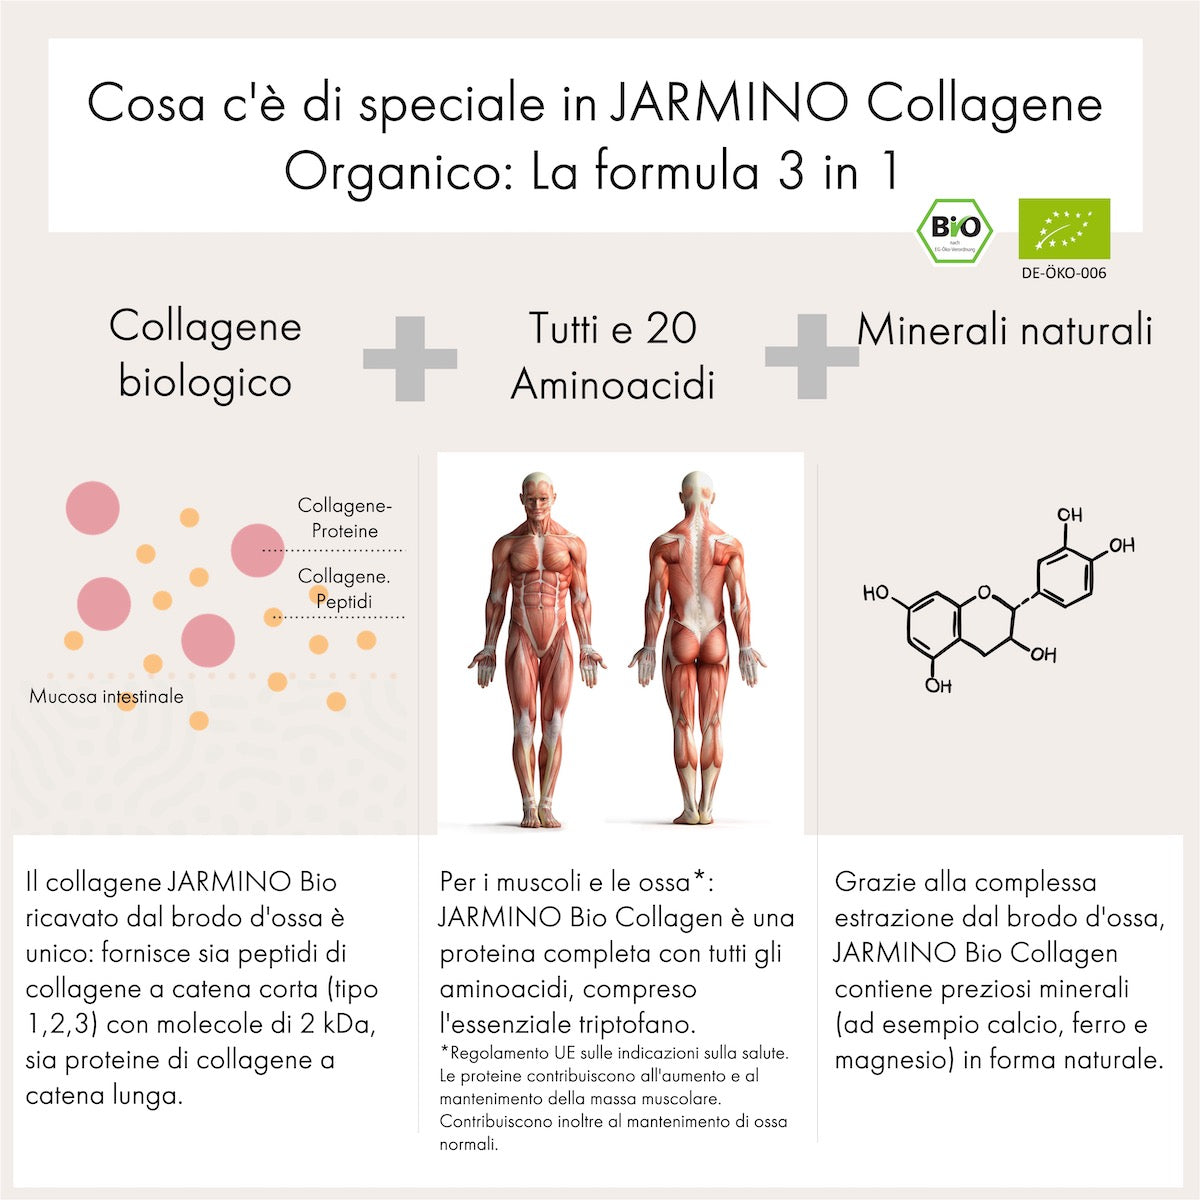 Collagene Organico (300g)